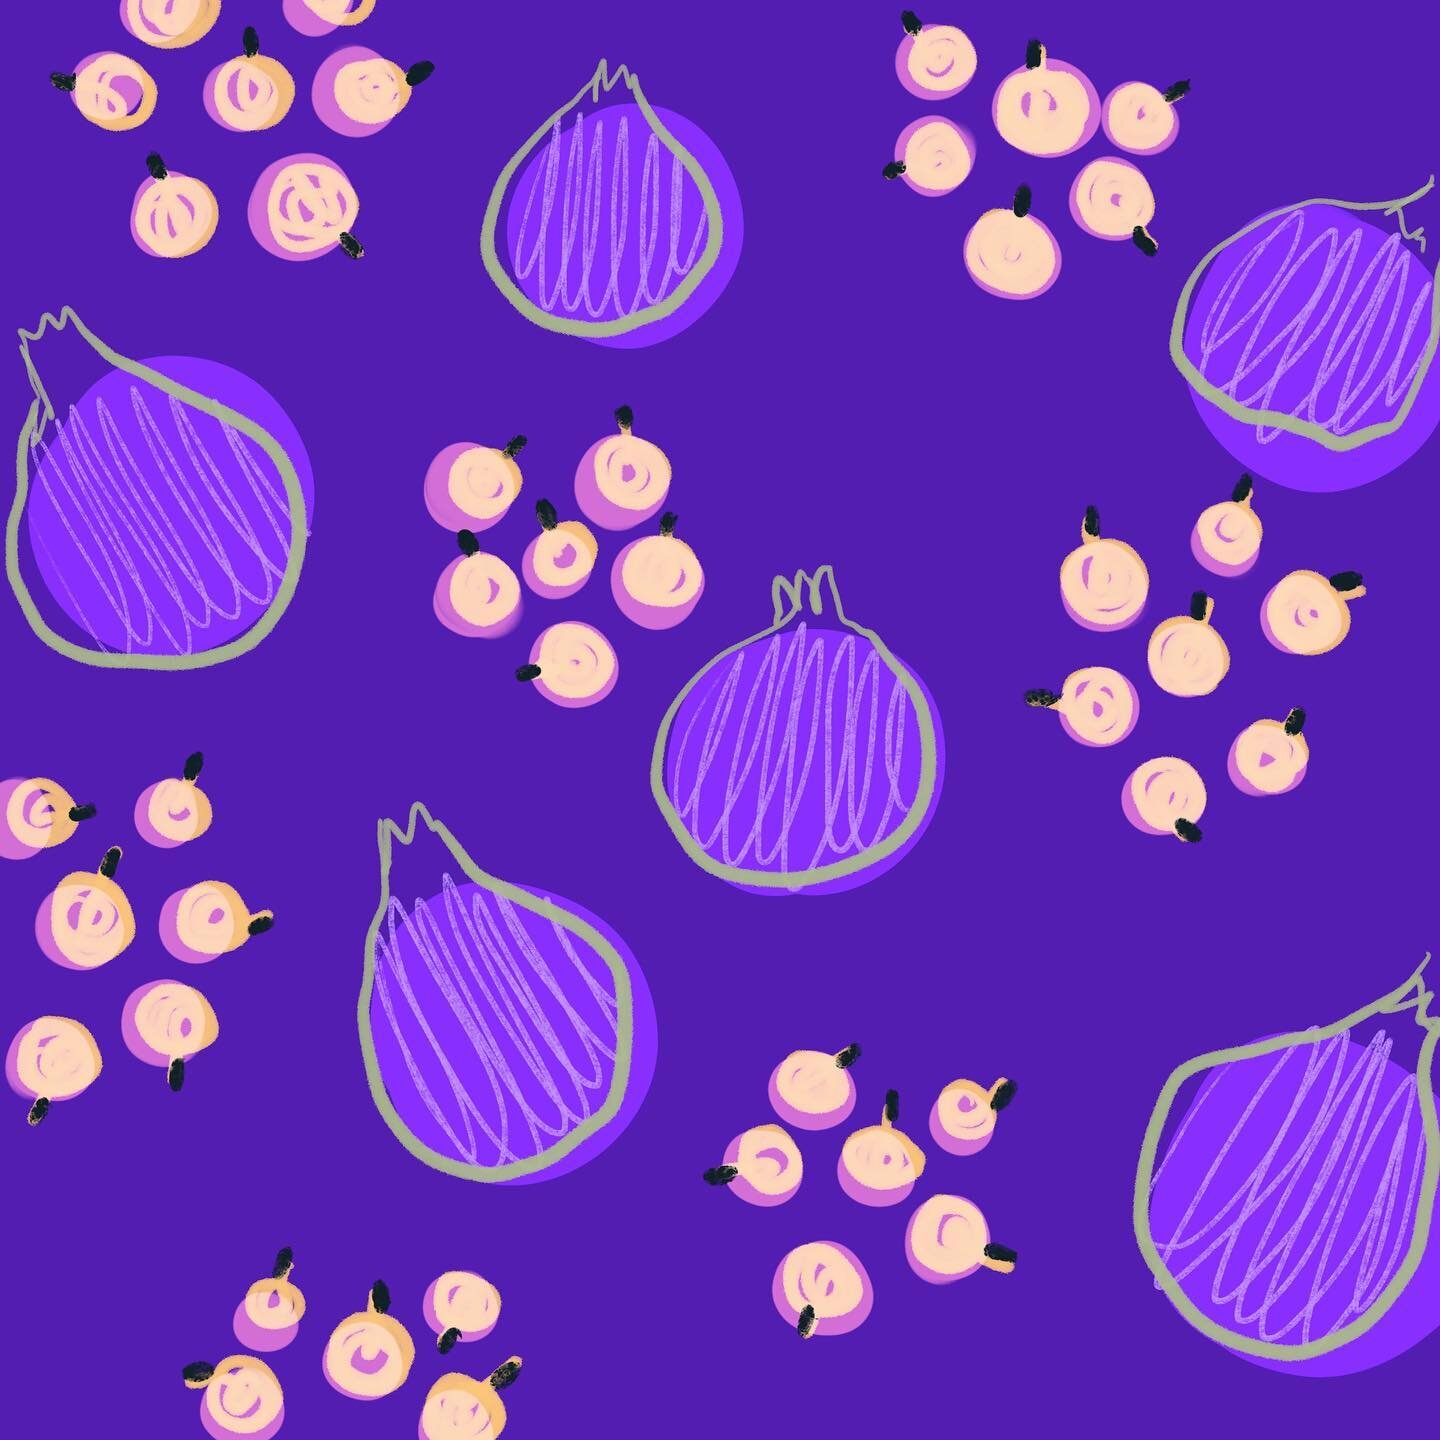 More scribbly berries! 

#illustration #digitaldrawing #digitalillustration #illustagram #procreate #patterndesign